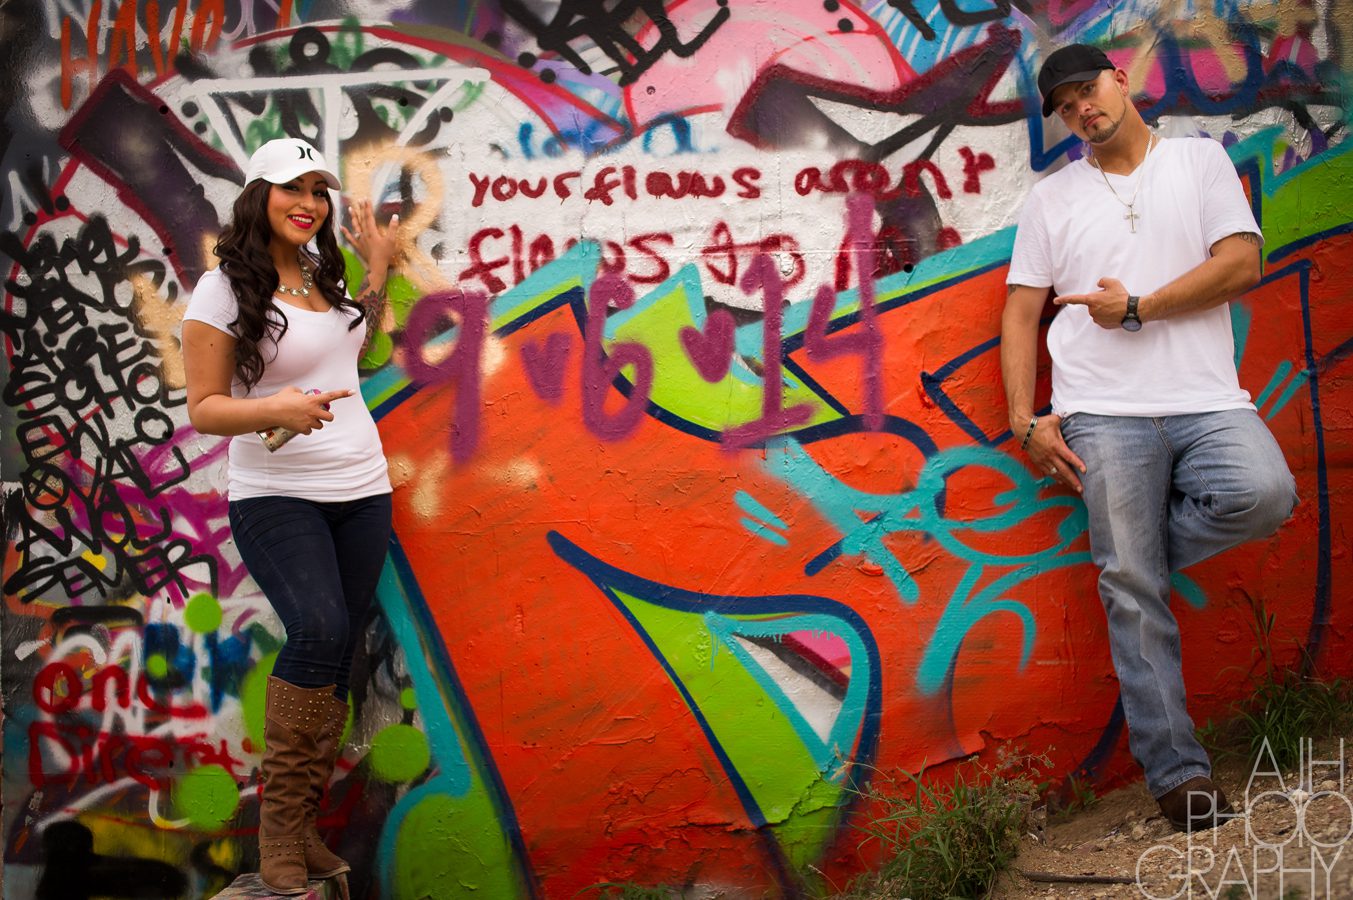 Graffiti engagement photos - AJH Photography